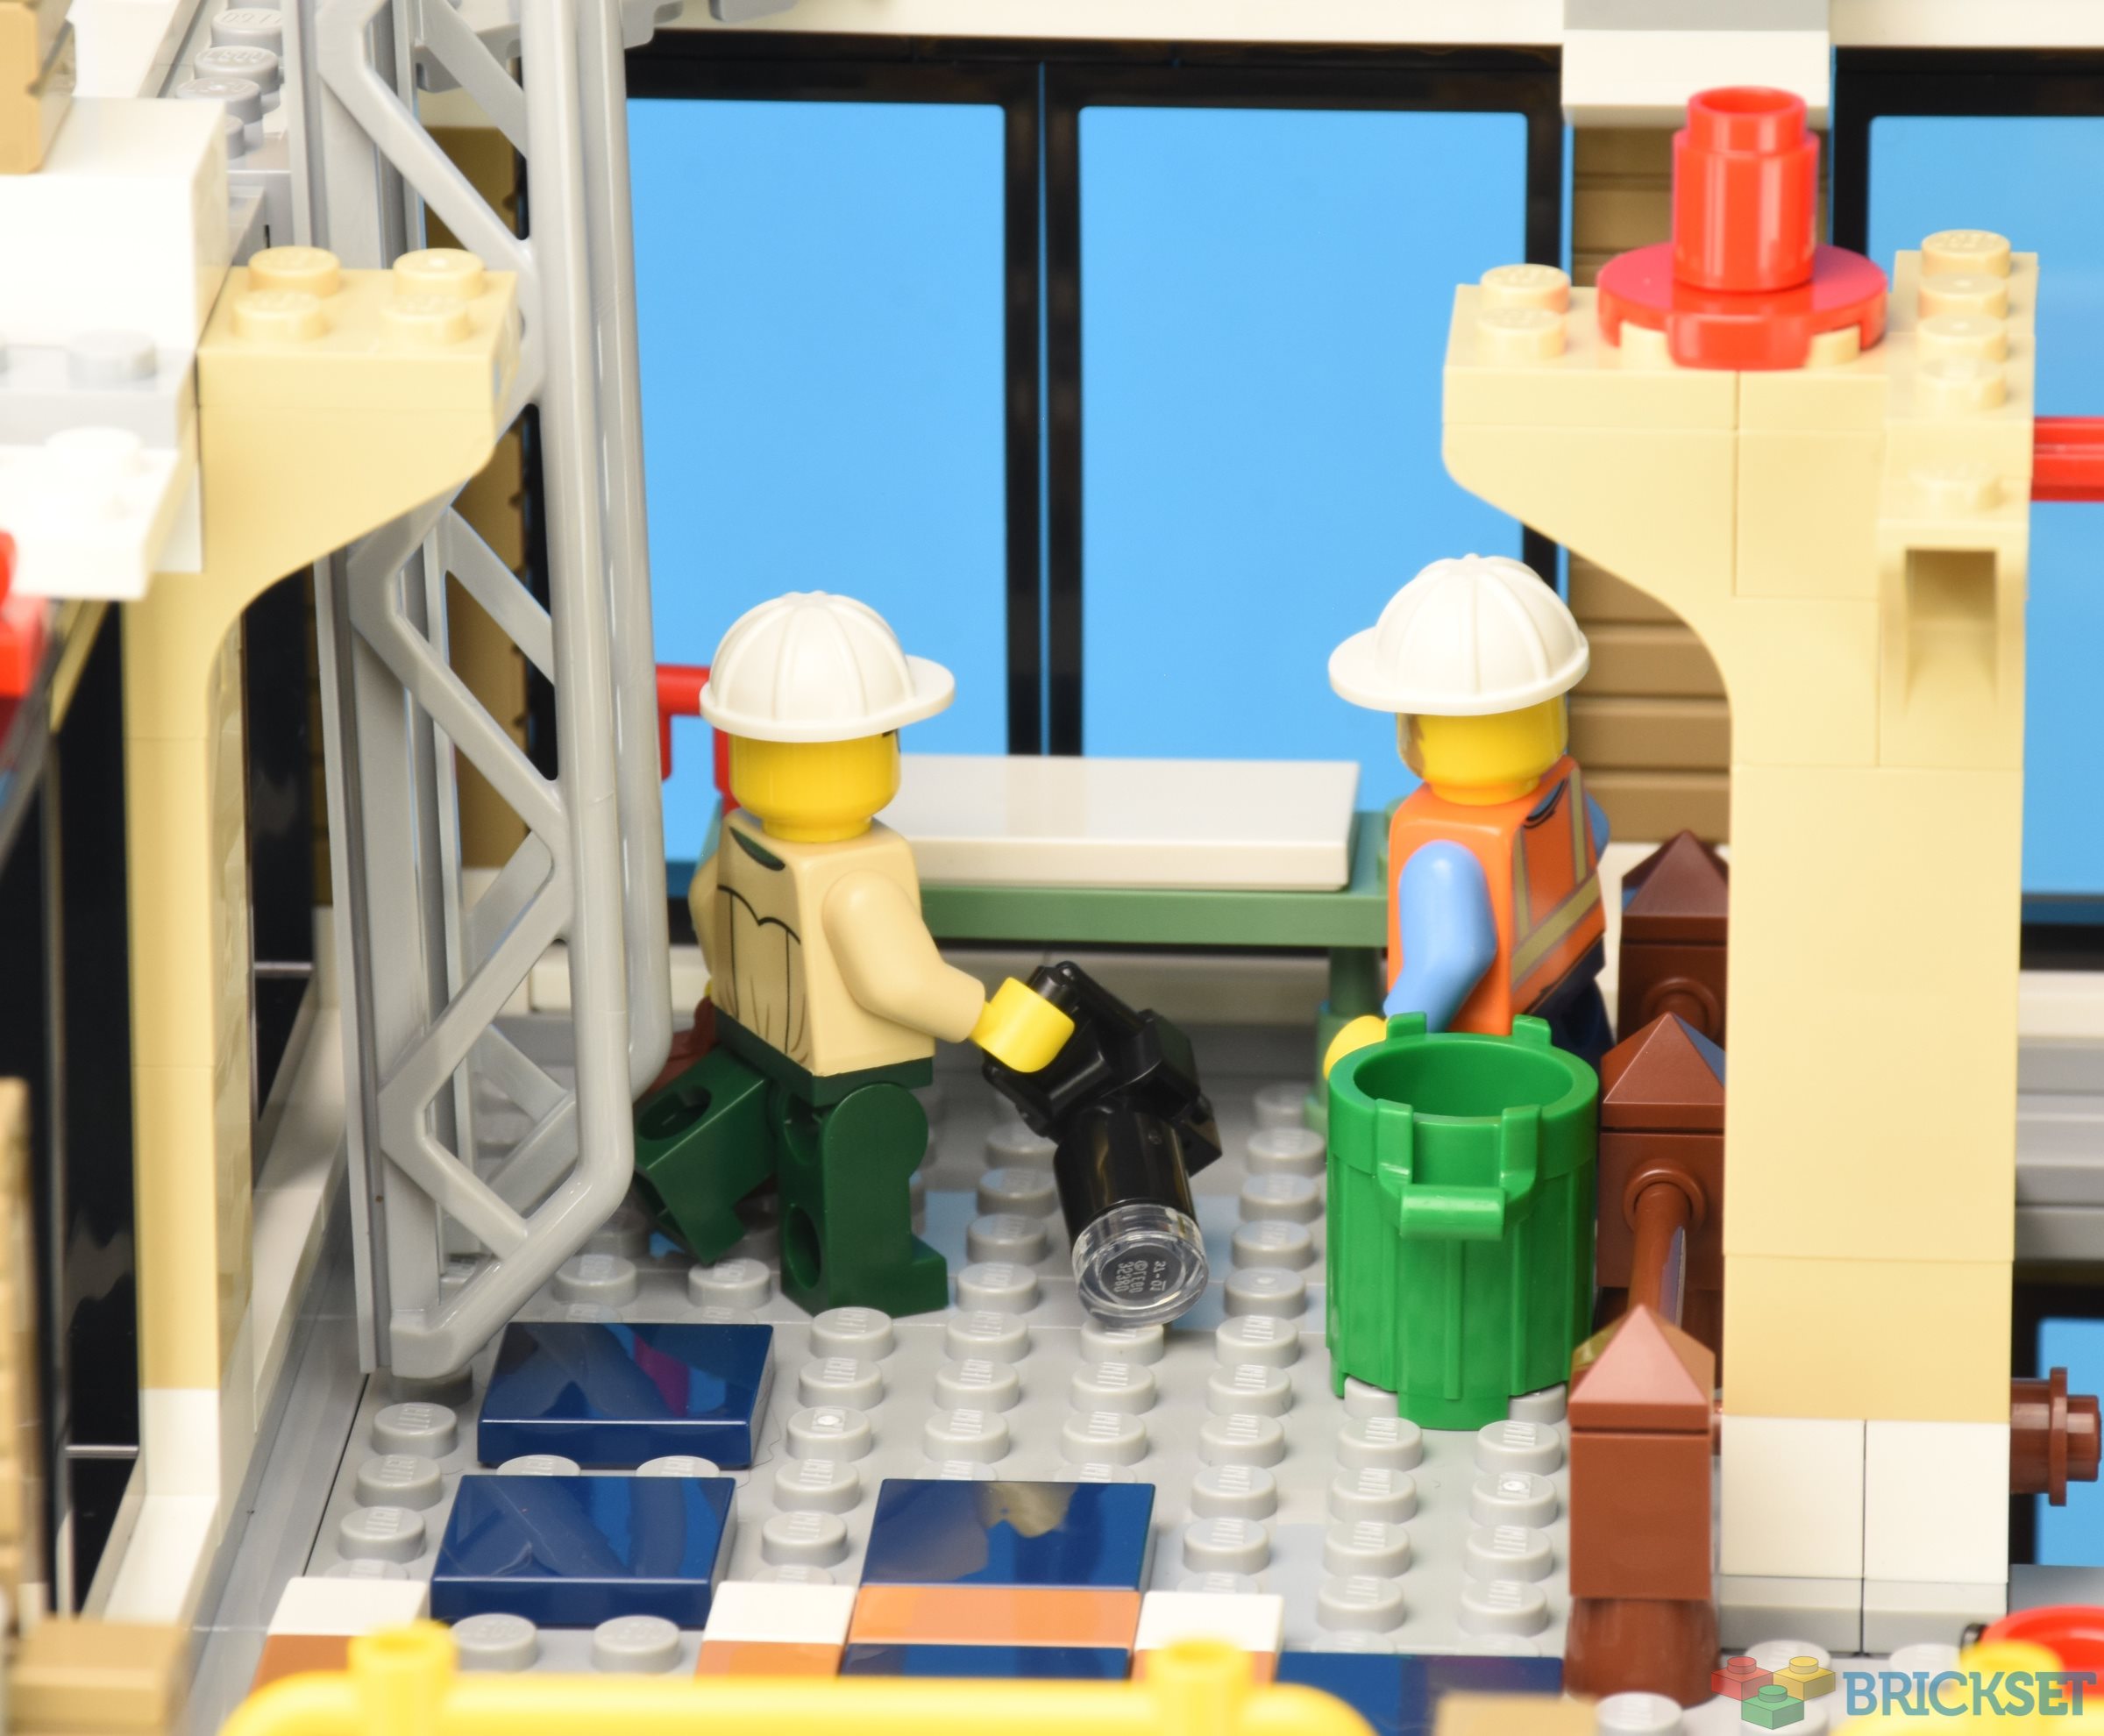 LEGO 910008 Modular Construction Site review | Brickset